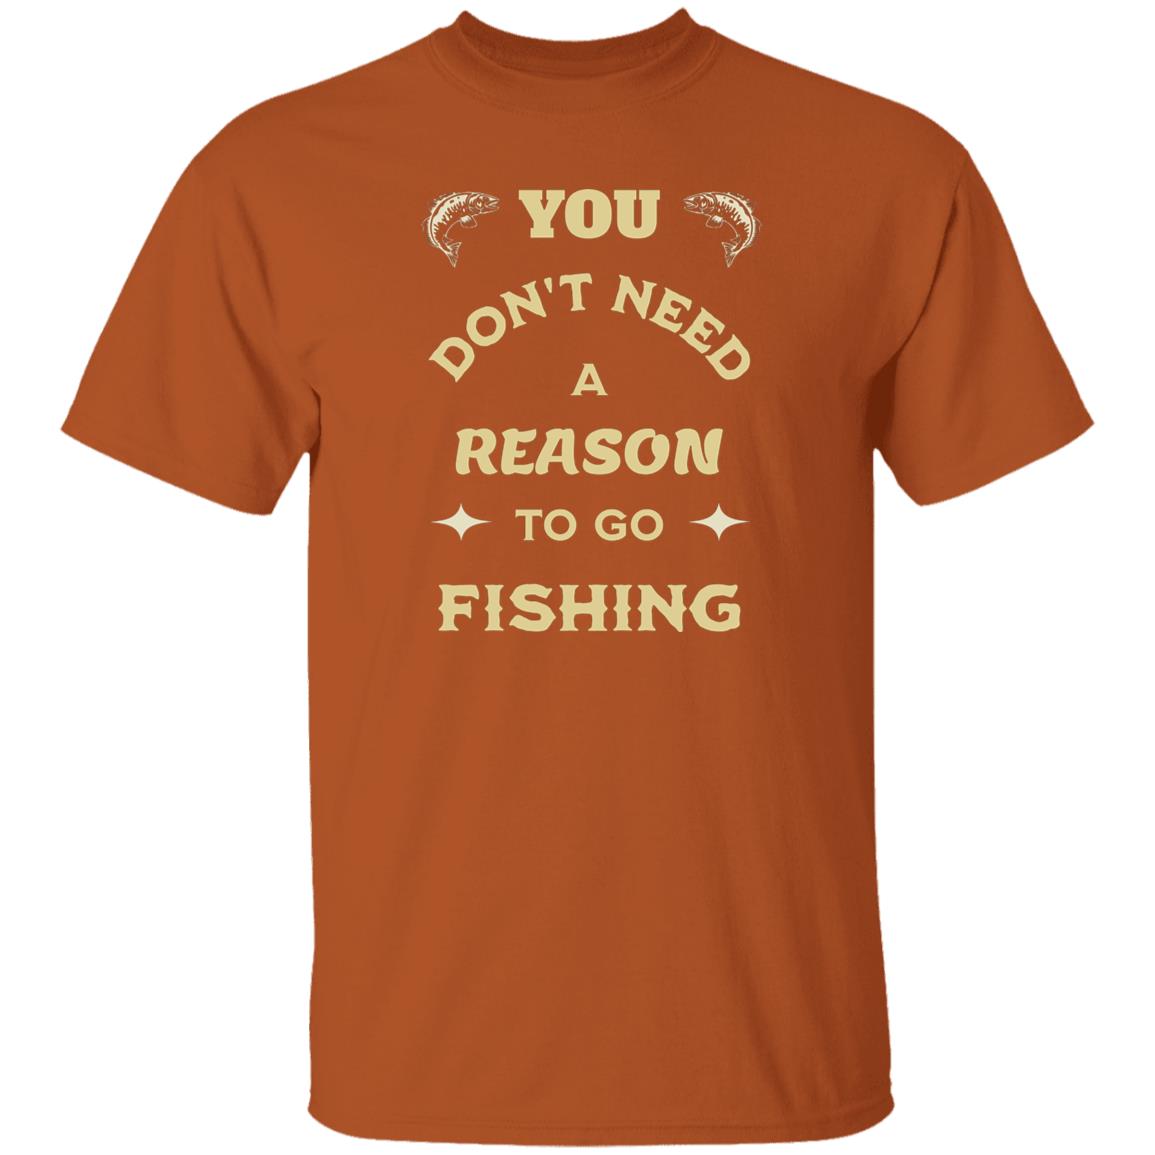 You don't need a reason to go fishing k t-shirt texas-orange